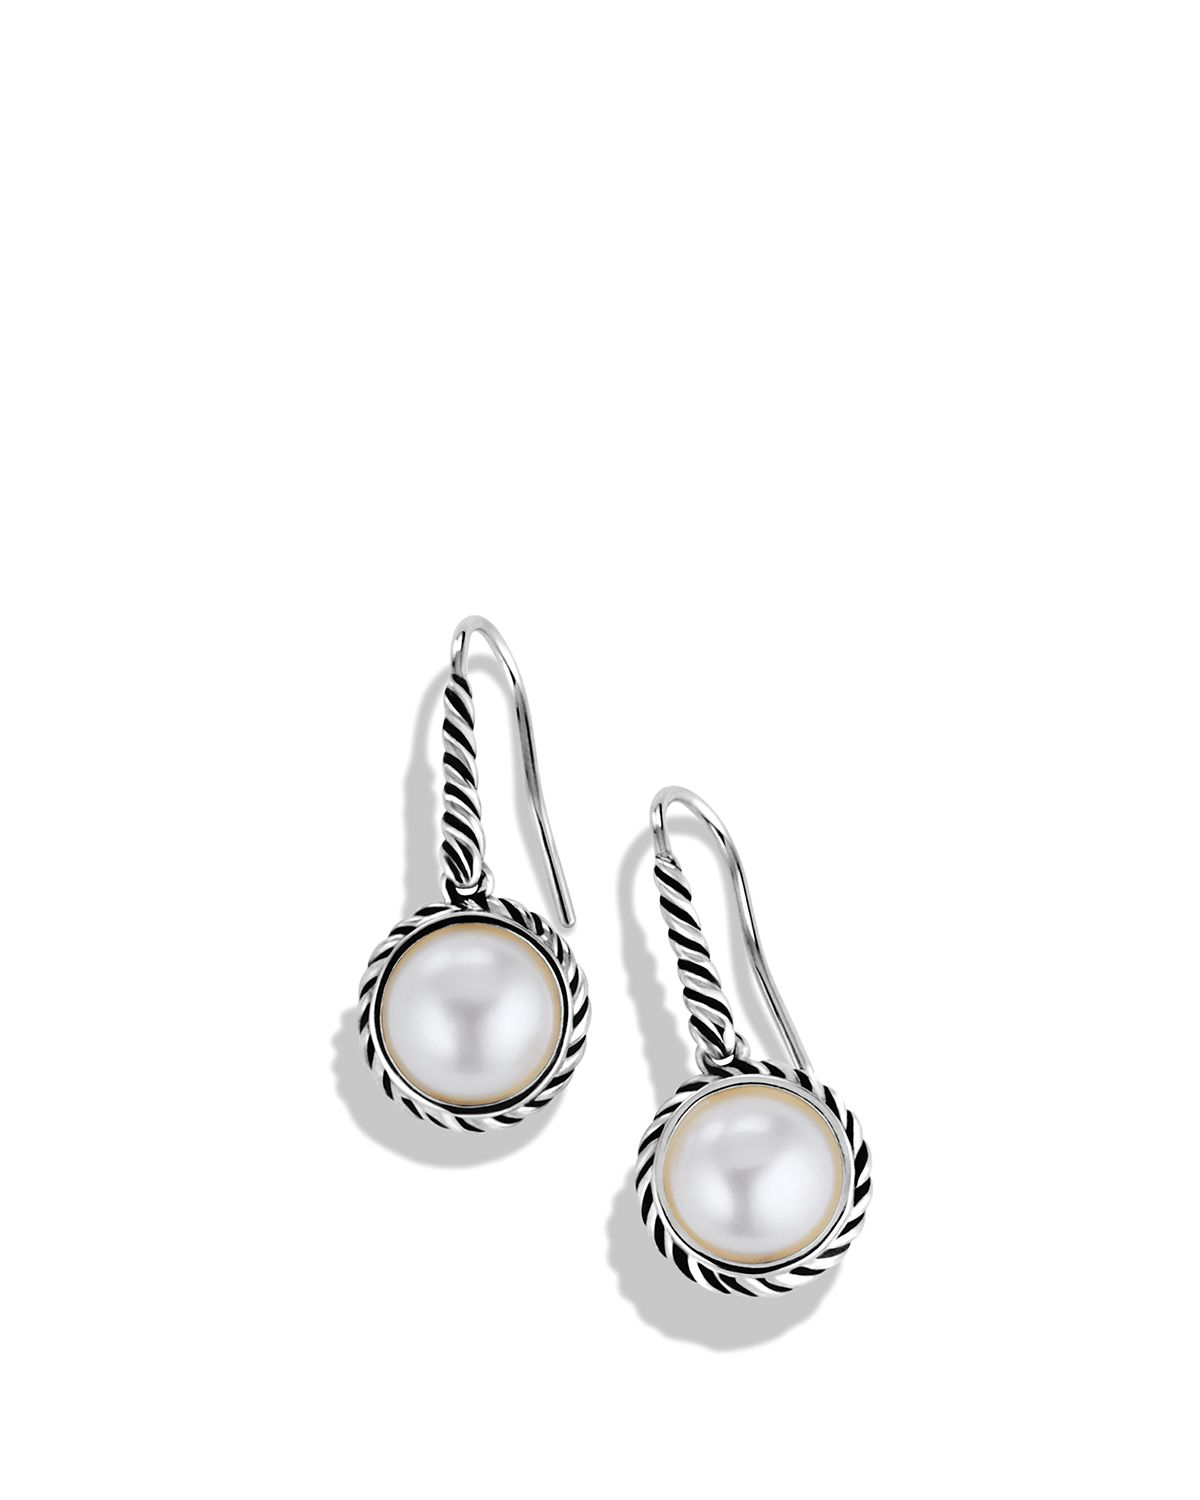 David Yurman Cable Pearl Drop Earrings in Silver/White (Metallic) - Lyst